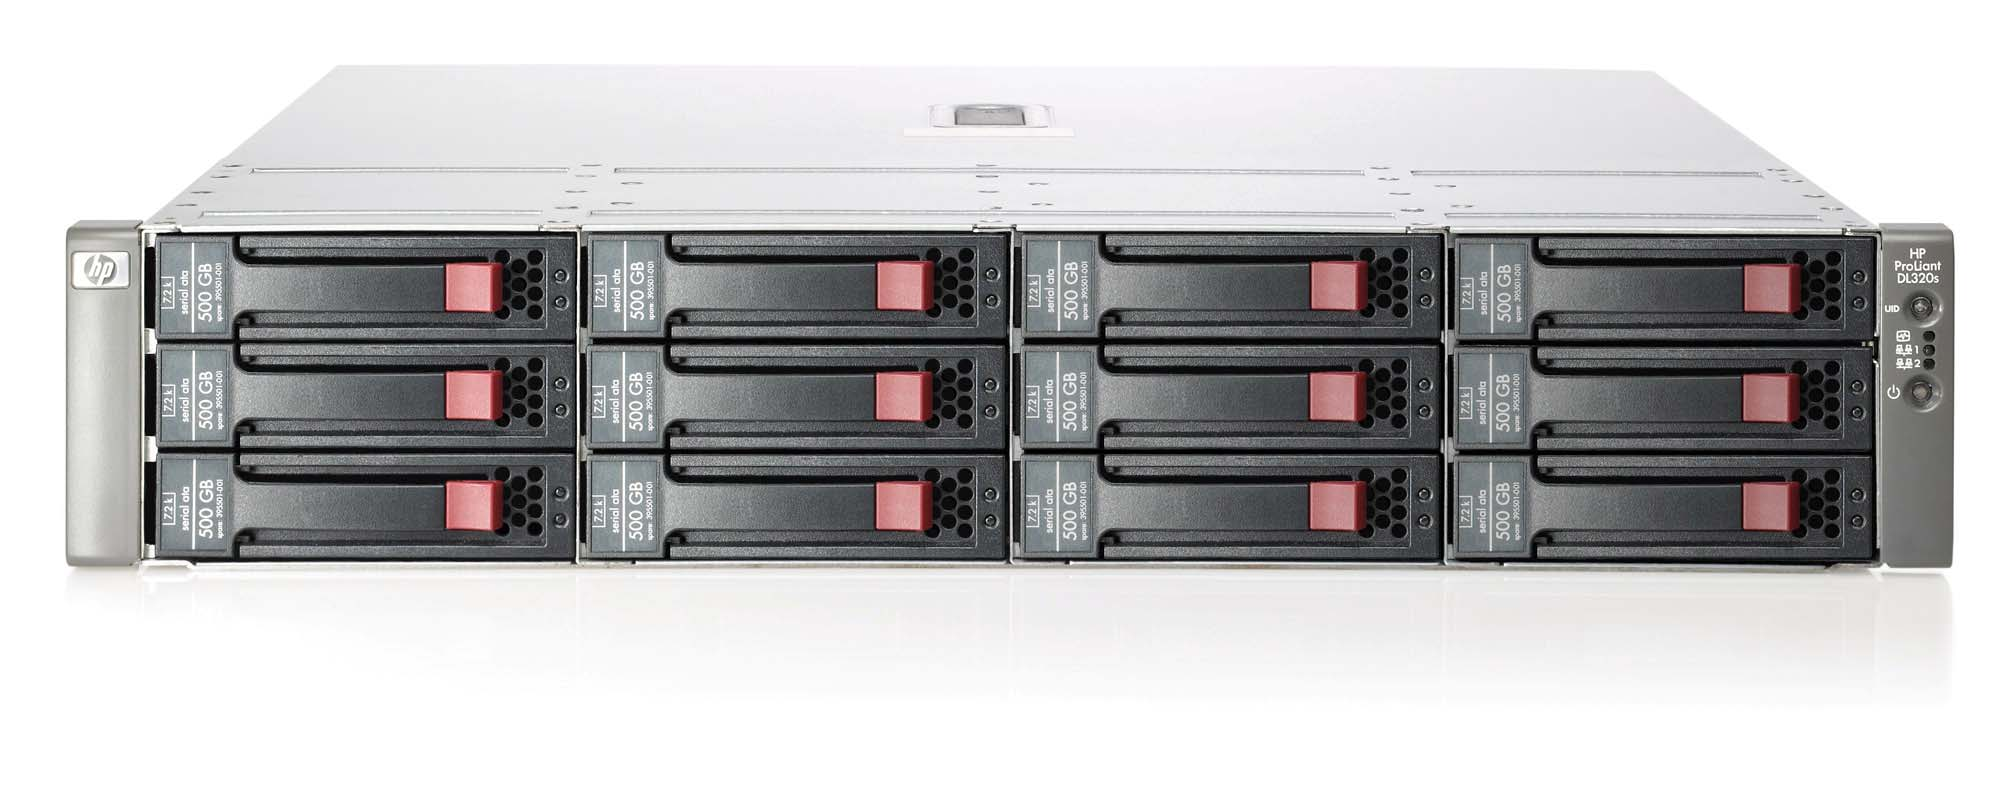 HP StorageWorks 1200 All-in-One Storage System 2008 8 28 10